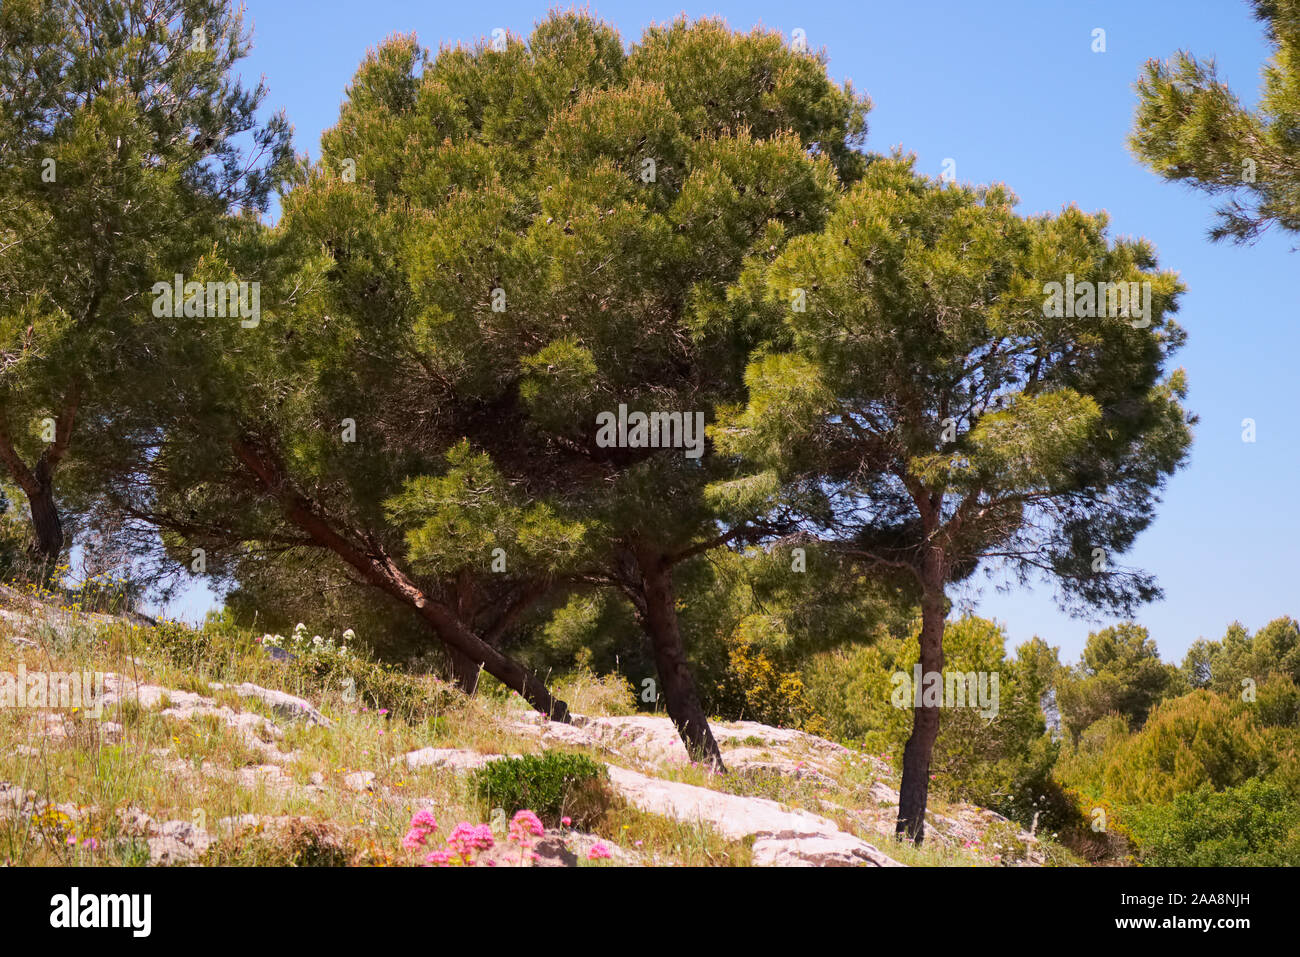 Umbrella or Stone Pine Pinus pinea in typical coastal Mediterranean garrigue habitat Stock Photo